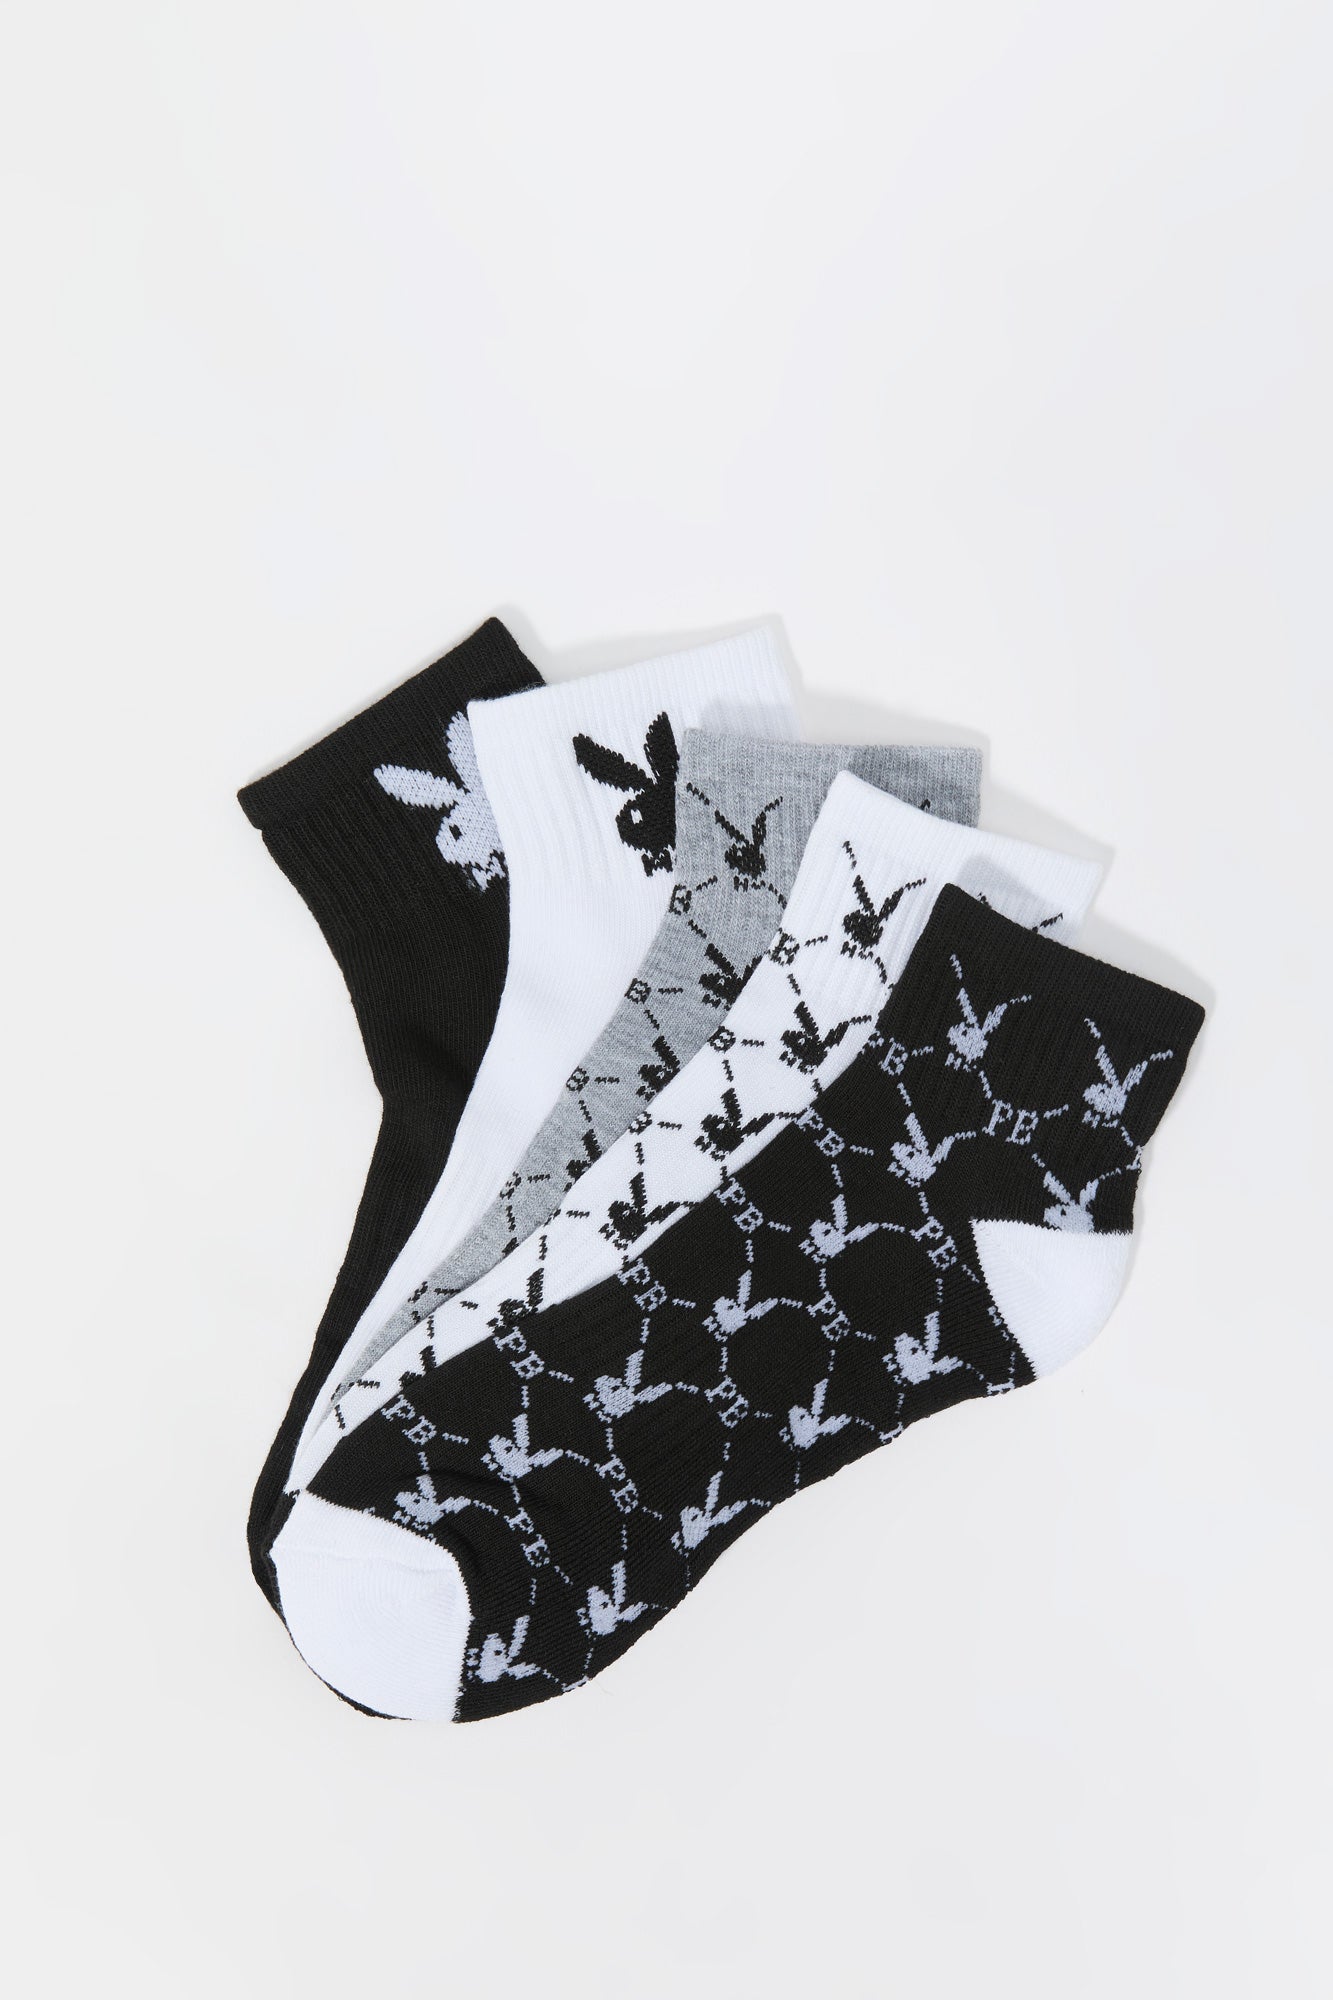 Playboy Ankle Socks (5 Pack)